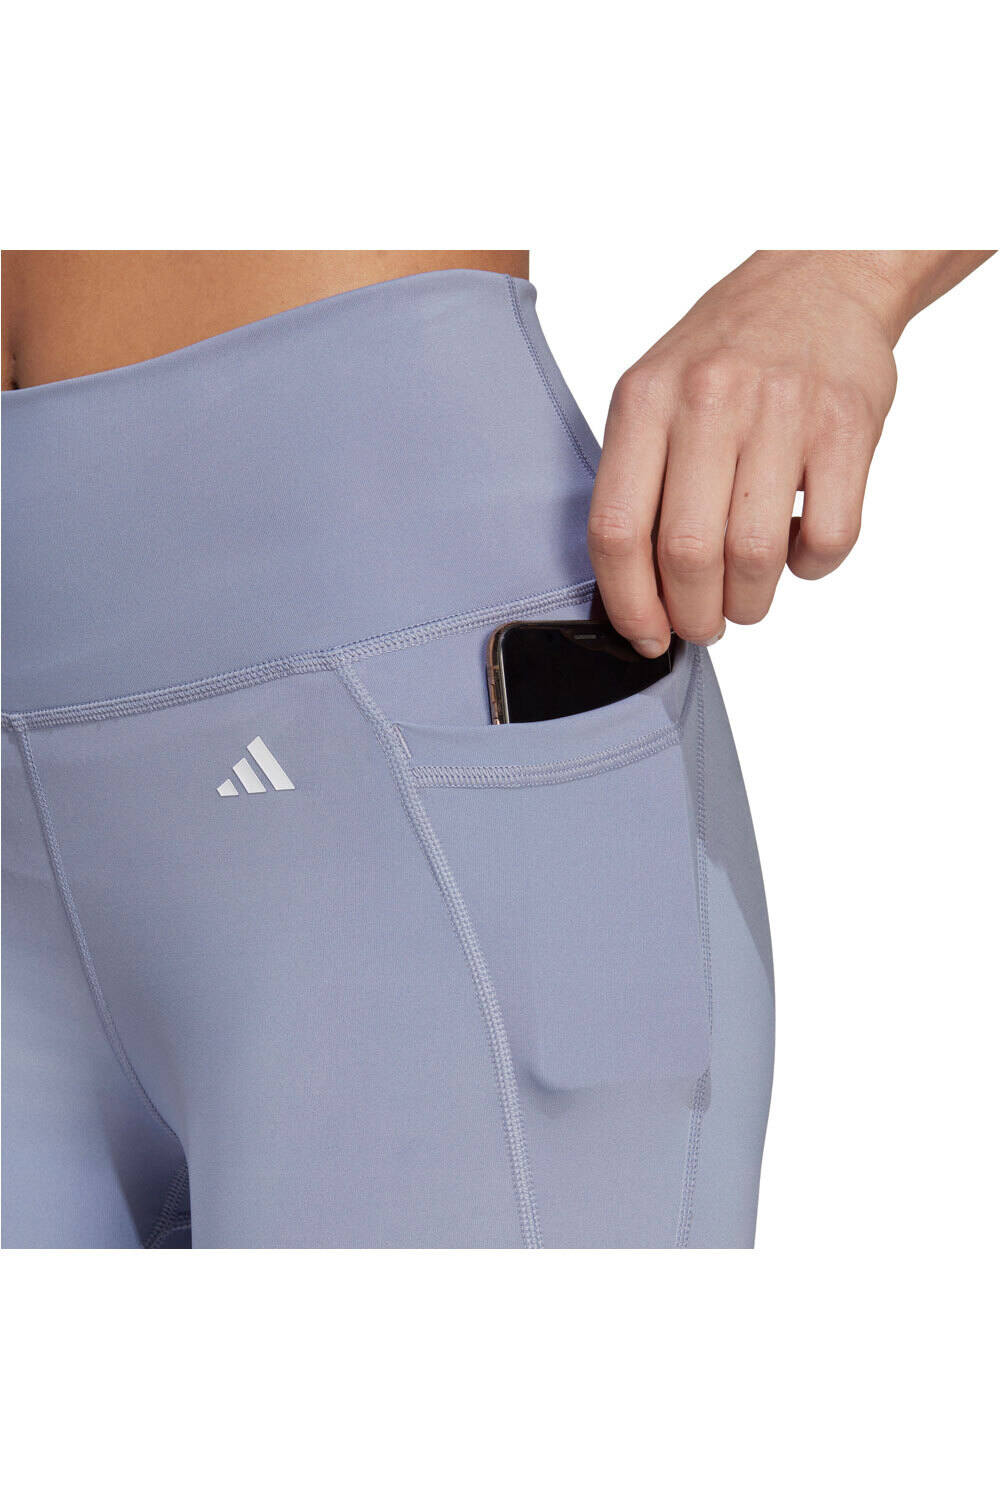 adidas pantalones y mallas largas fitness mujer Optime Stash Pocket 7/8 de tiro alto vista detalle